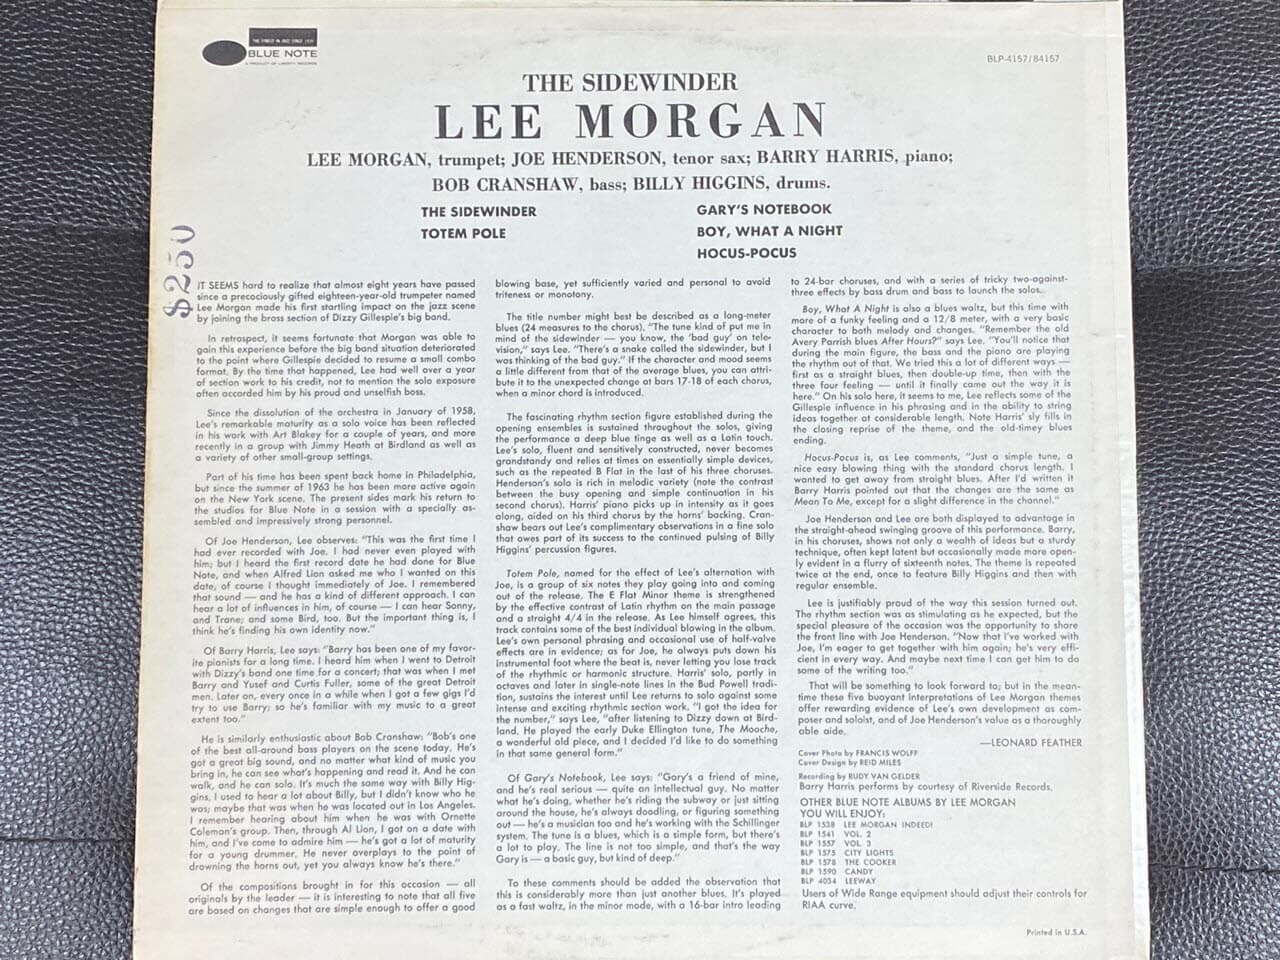 [LP] 리 모건 - Lee Morgan - The Sidewinder LP [1966] [U.S반]